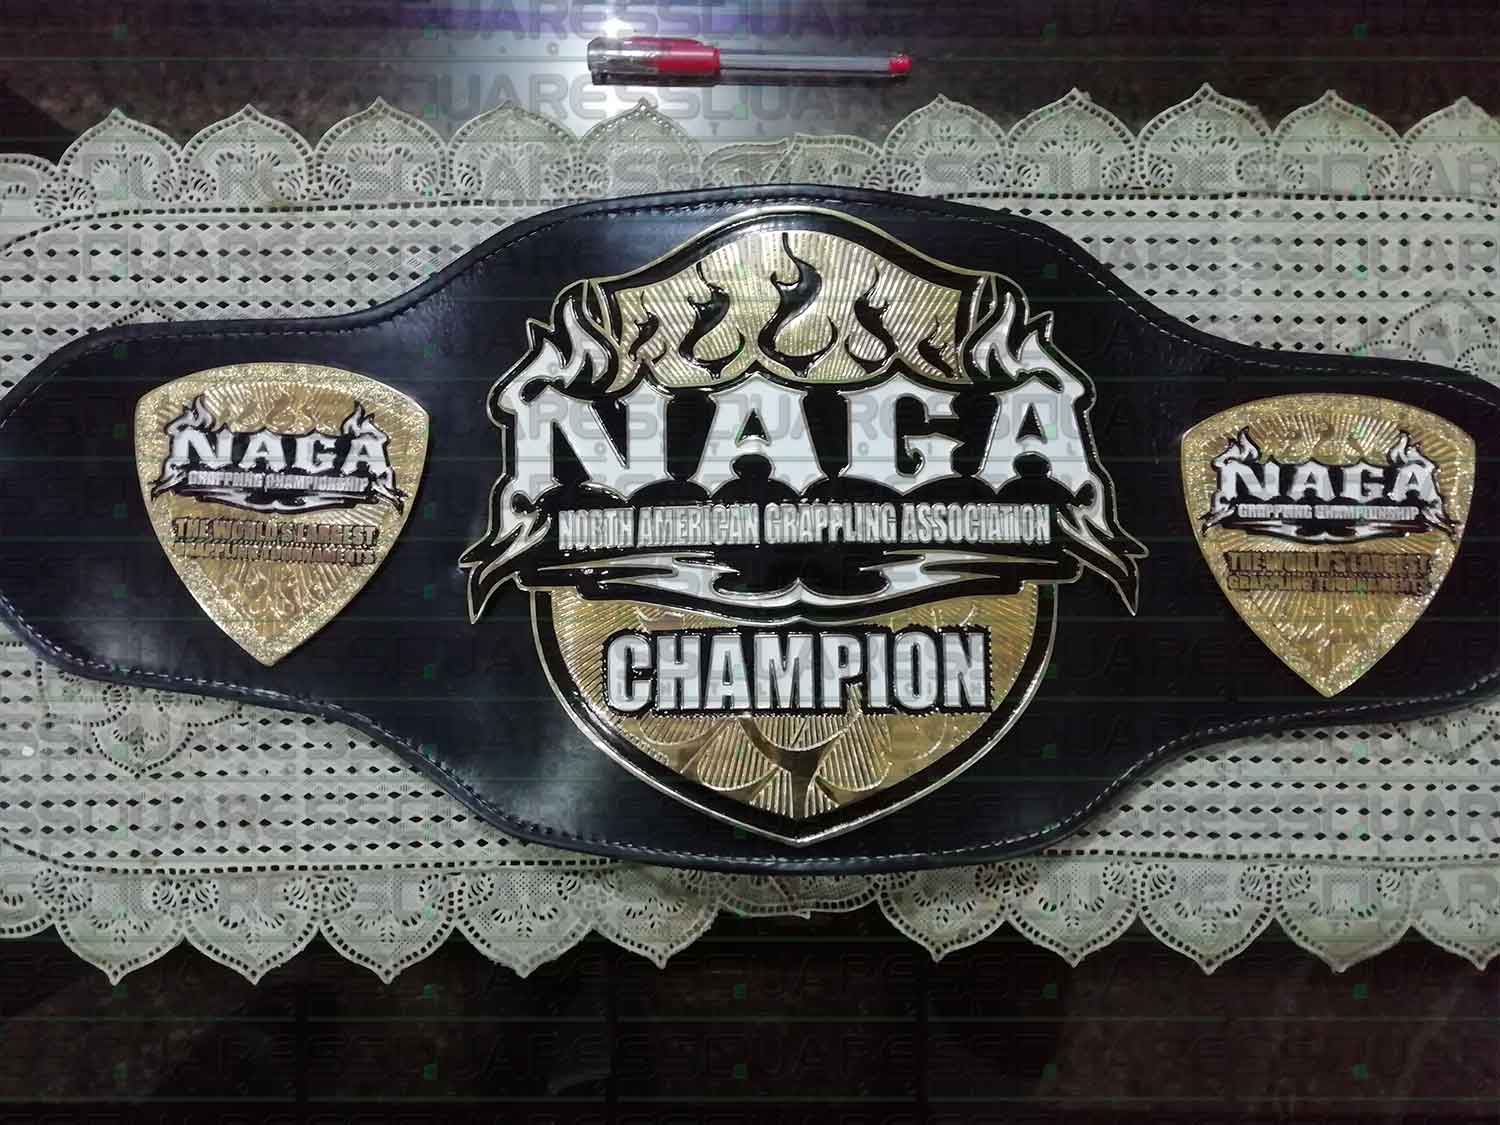 NAGA North American grappling association champion replica belt